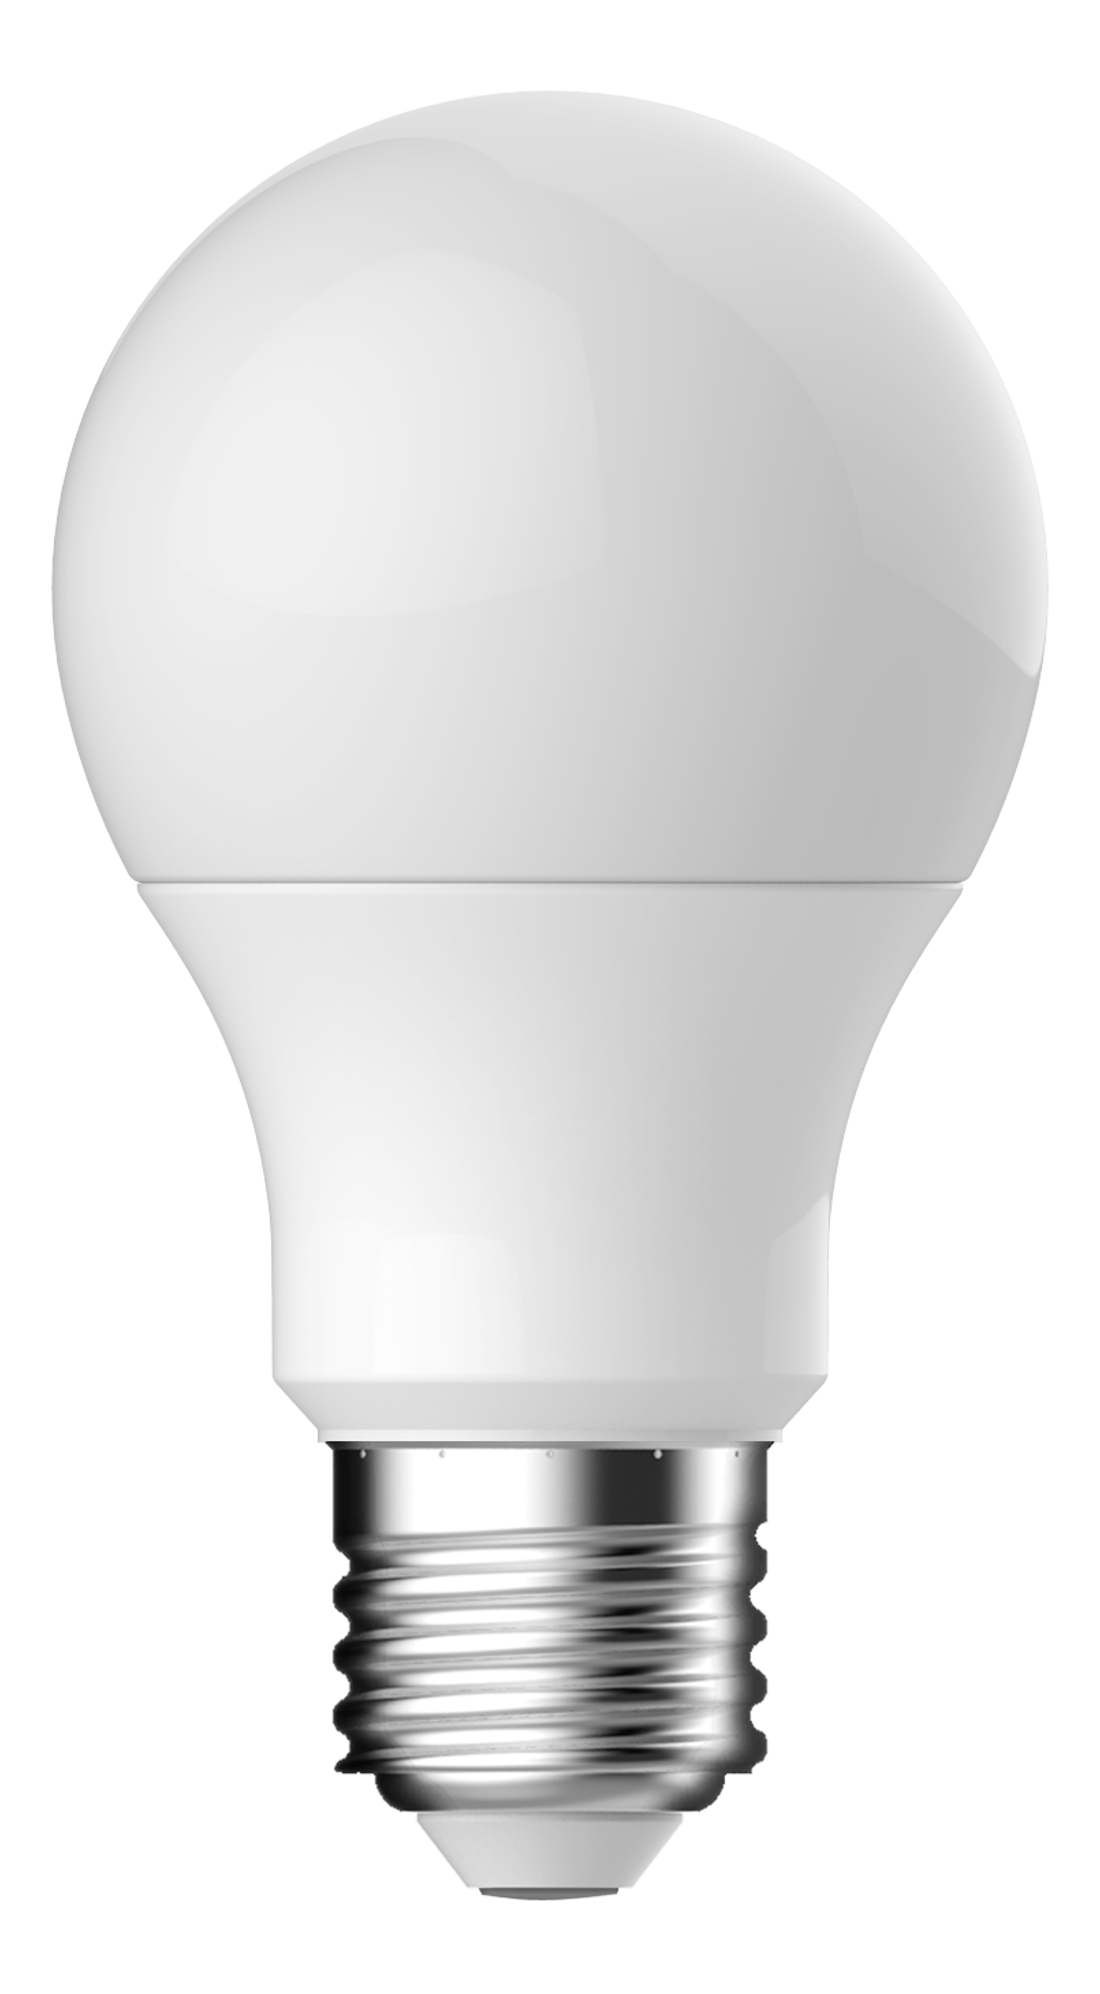 ISY ISYLED E27, 8,6W, paquet de 3 - Lampe LED